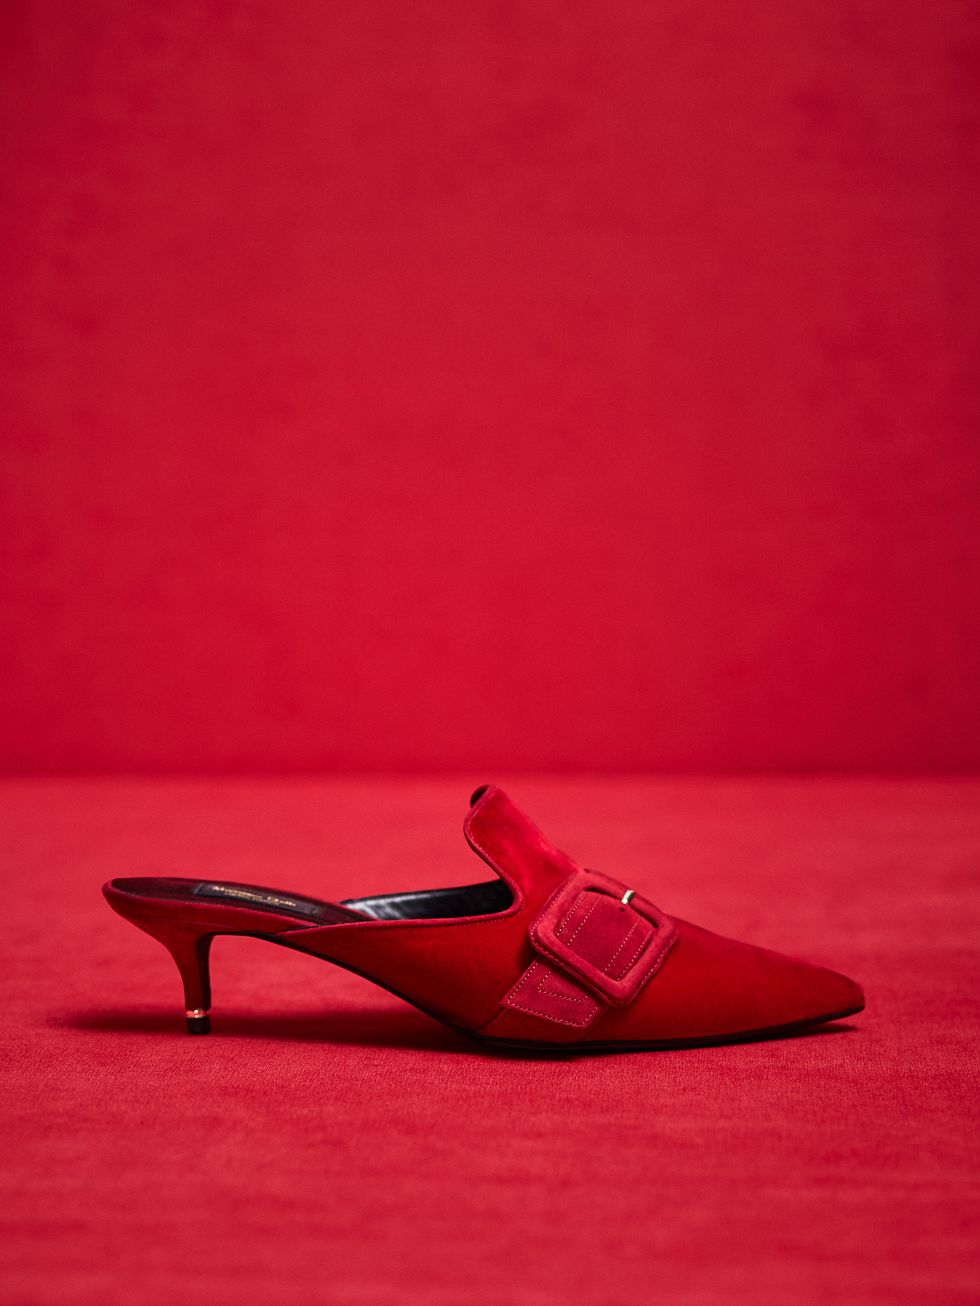 Footwear, Red, Shoe, High heels, Carmine, Basic pump, Leather, Still life photography, Sandal, 